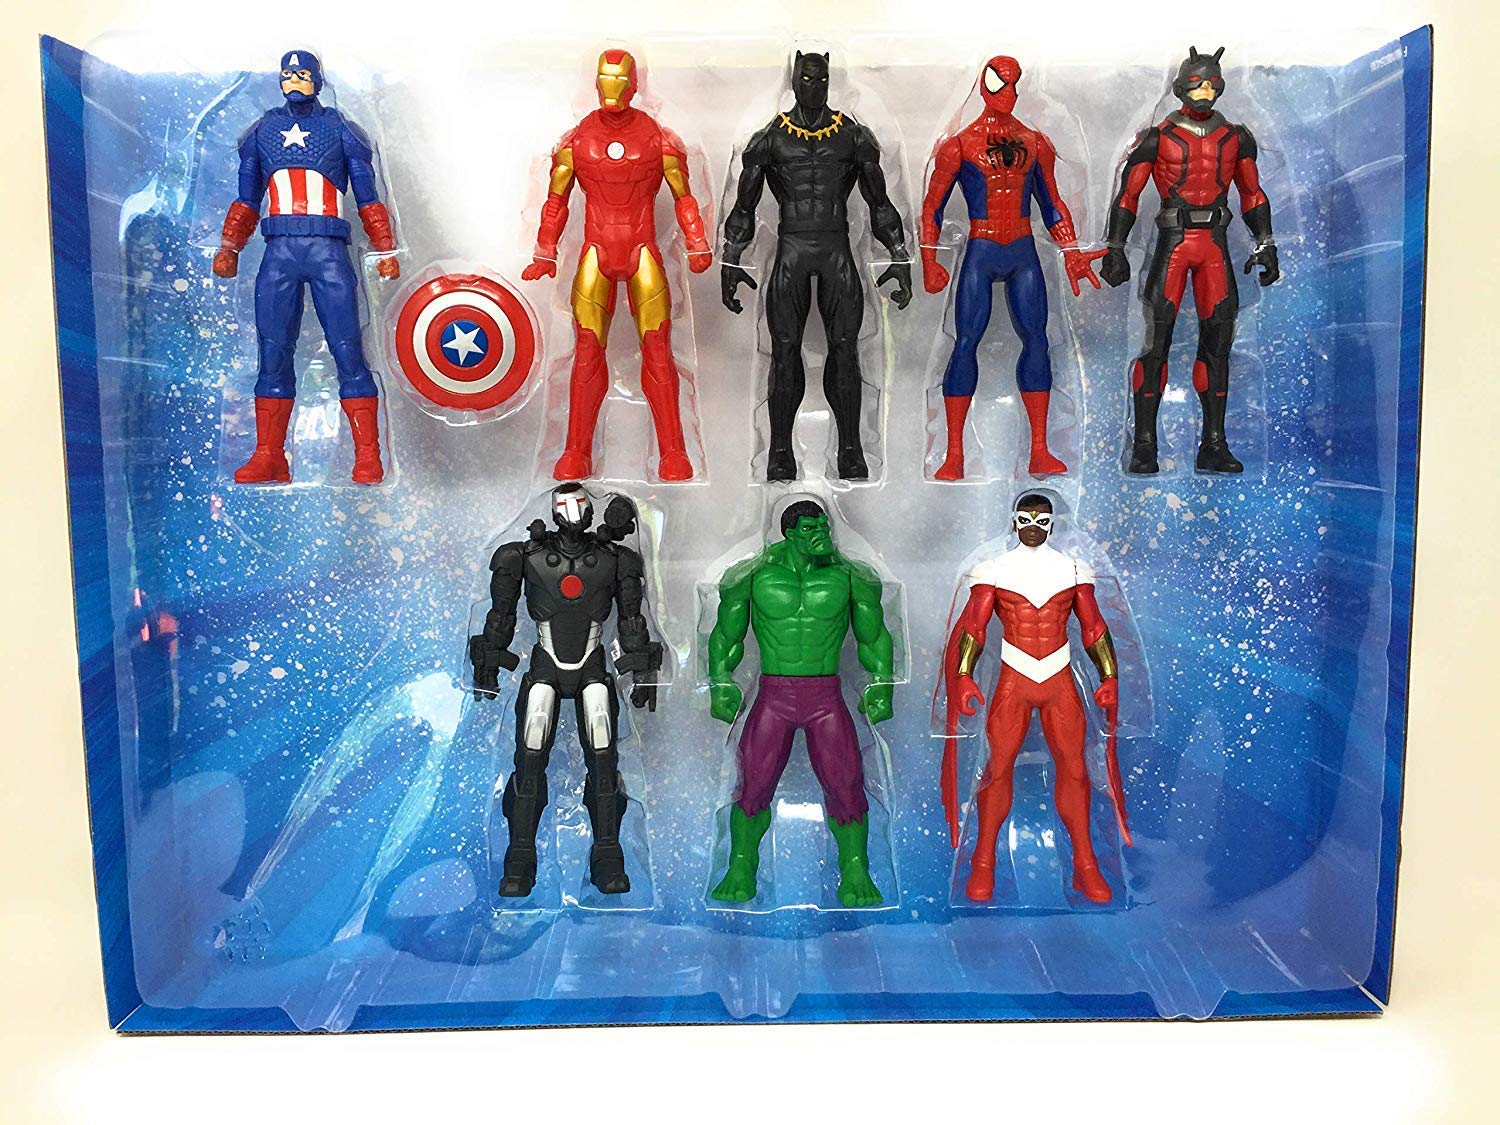 Marvel Avengers Action Figures - Iron Man, Hulk, Black Panther, Captain America, Spider Man, Ant Man, War Machine & Falcon! (8 Action Figures)